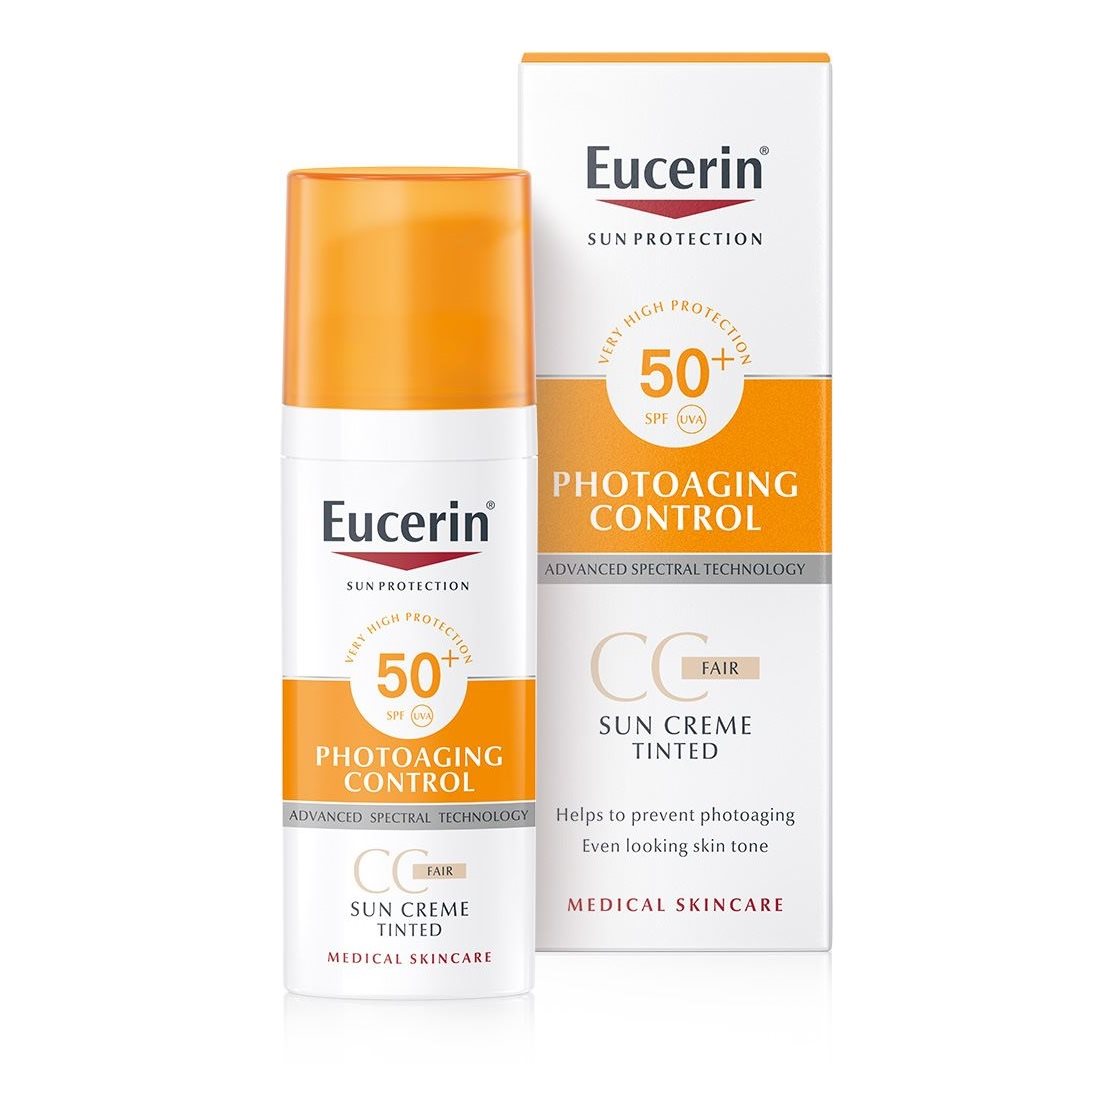 Eucerin Sun Crème Tinted Photoaging Control SPF 50+ Fair 